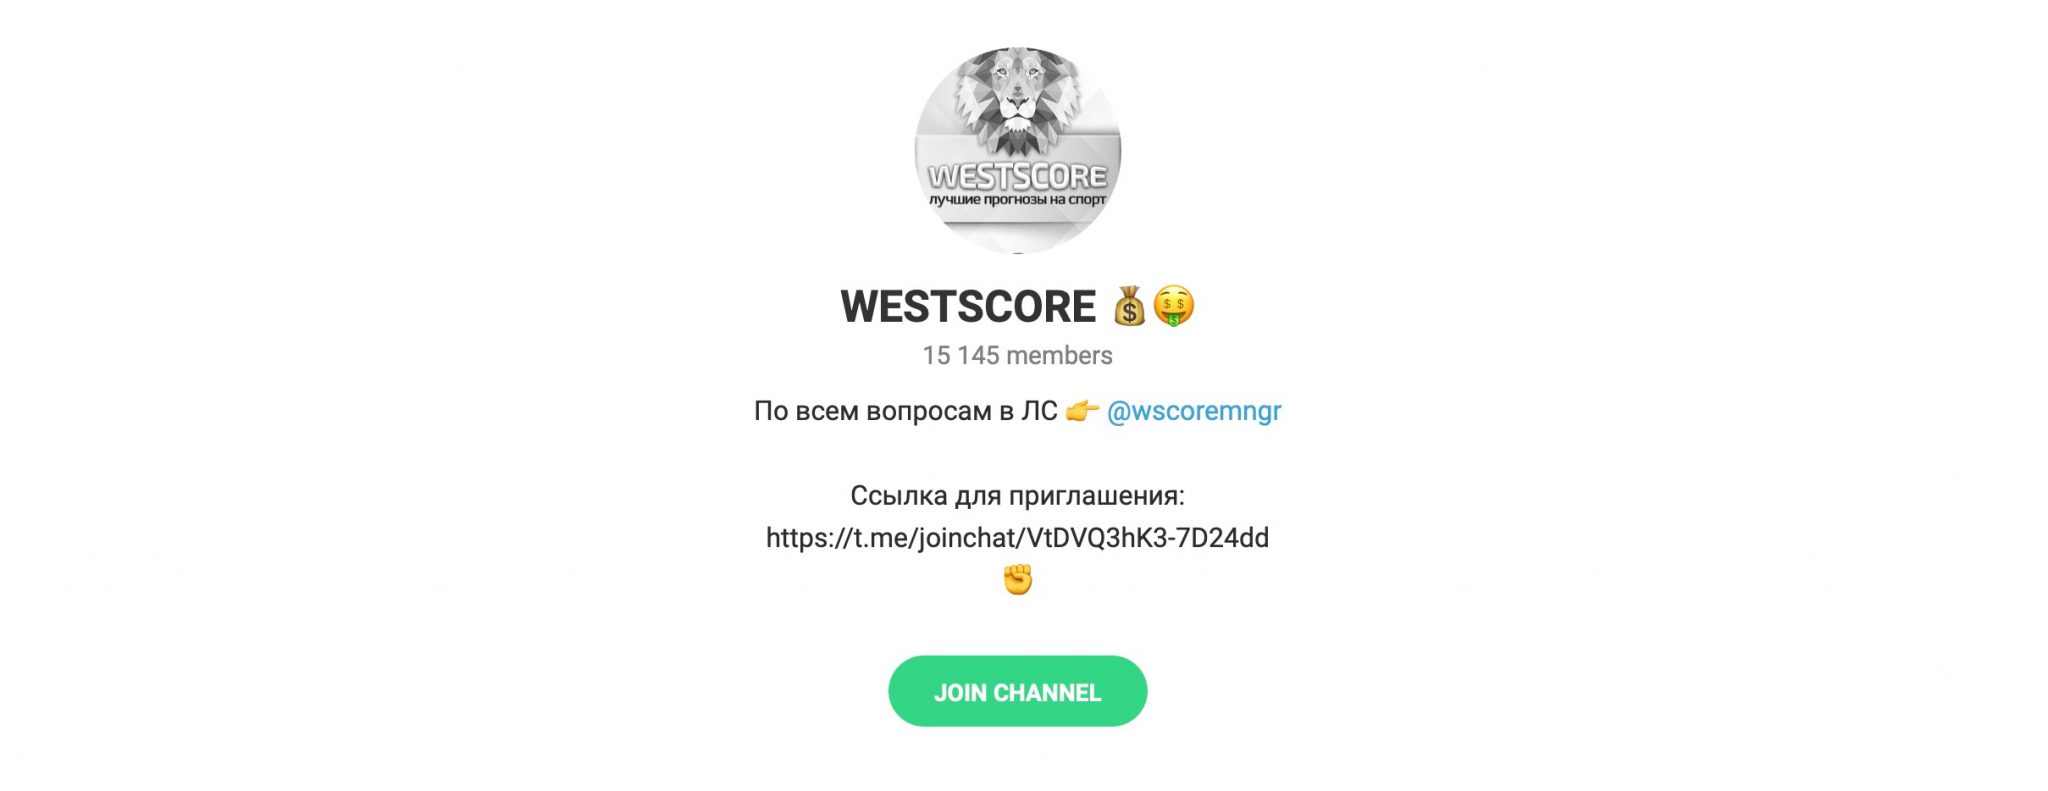 Внешний вид телеграм канала WestScore